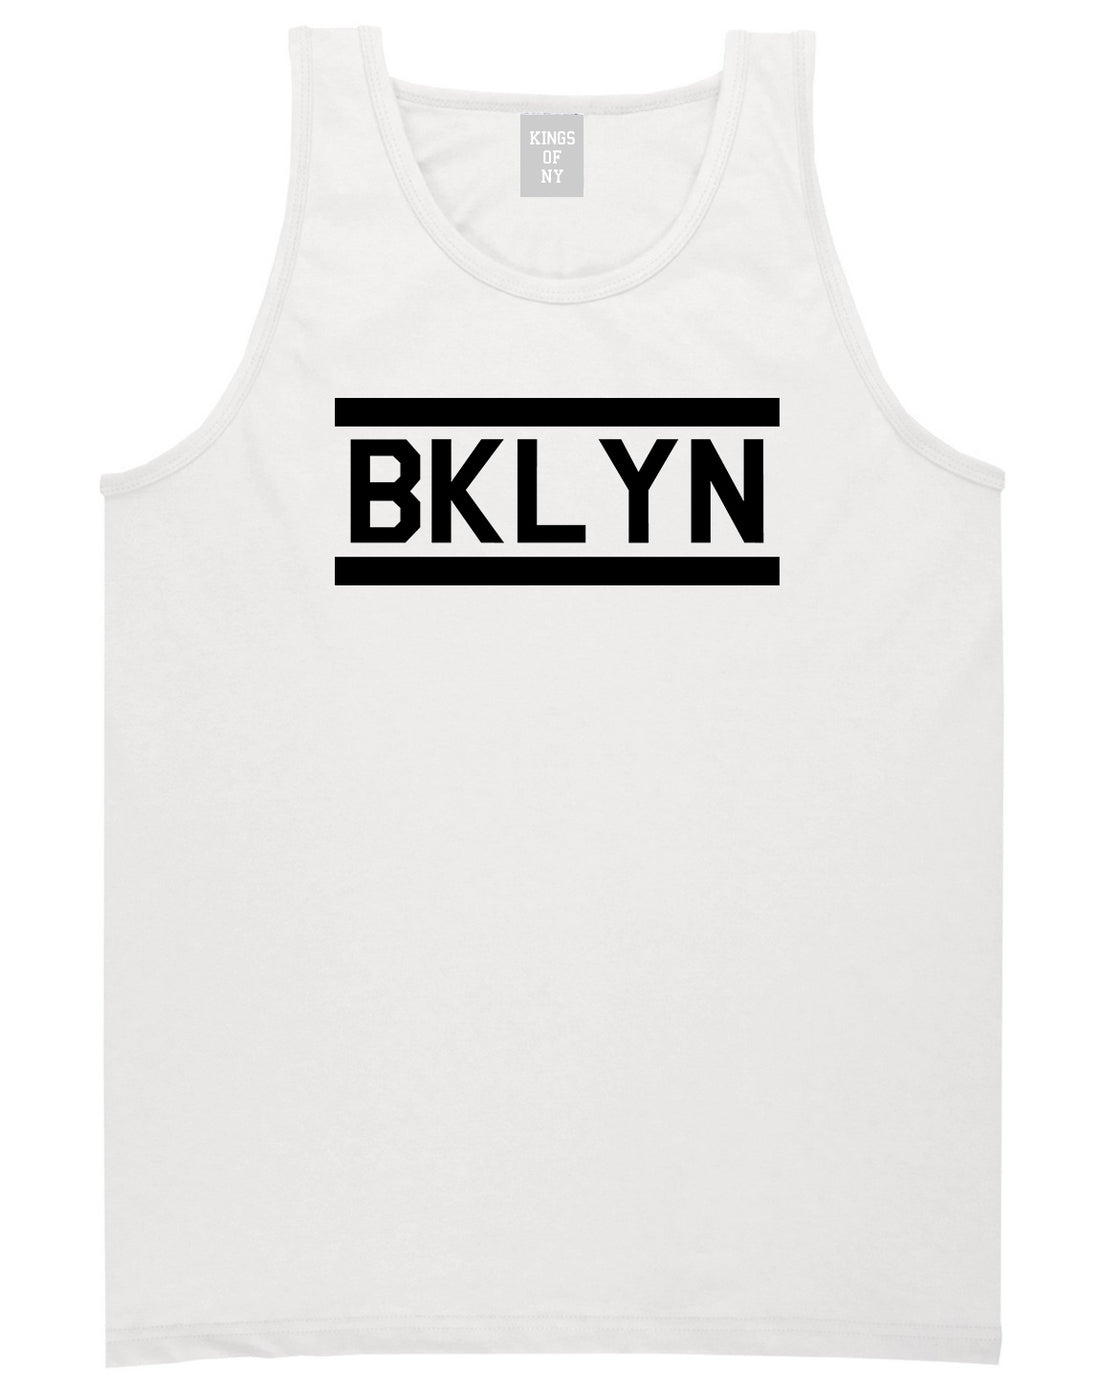 BKLYN Brooklyn Mens Tank Top Shirt White by Kings Of NY